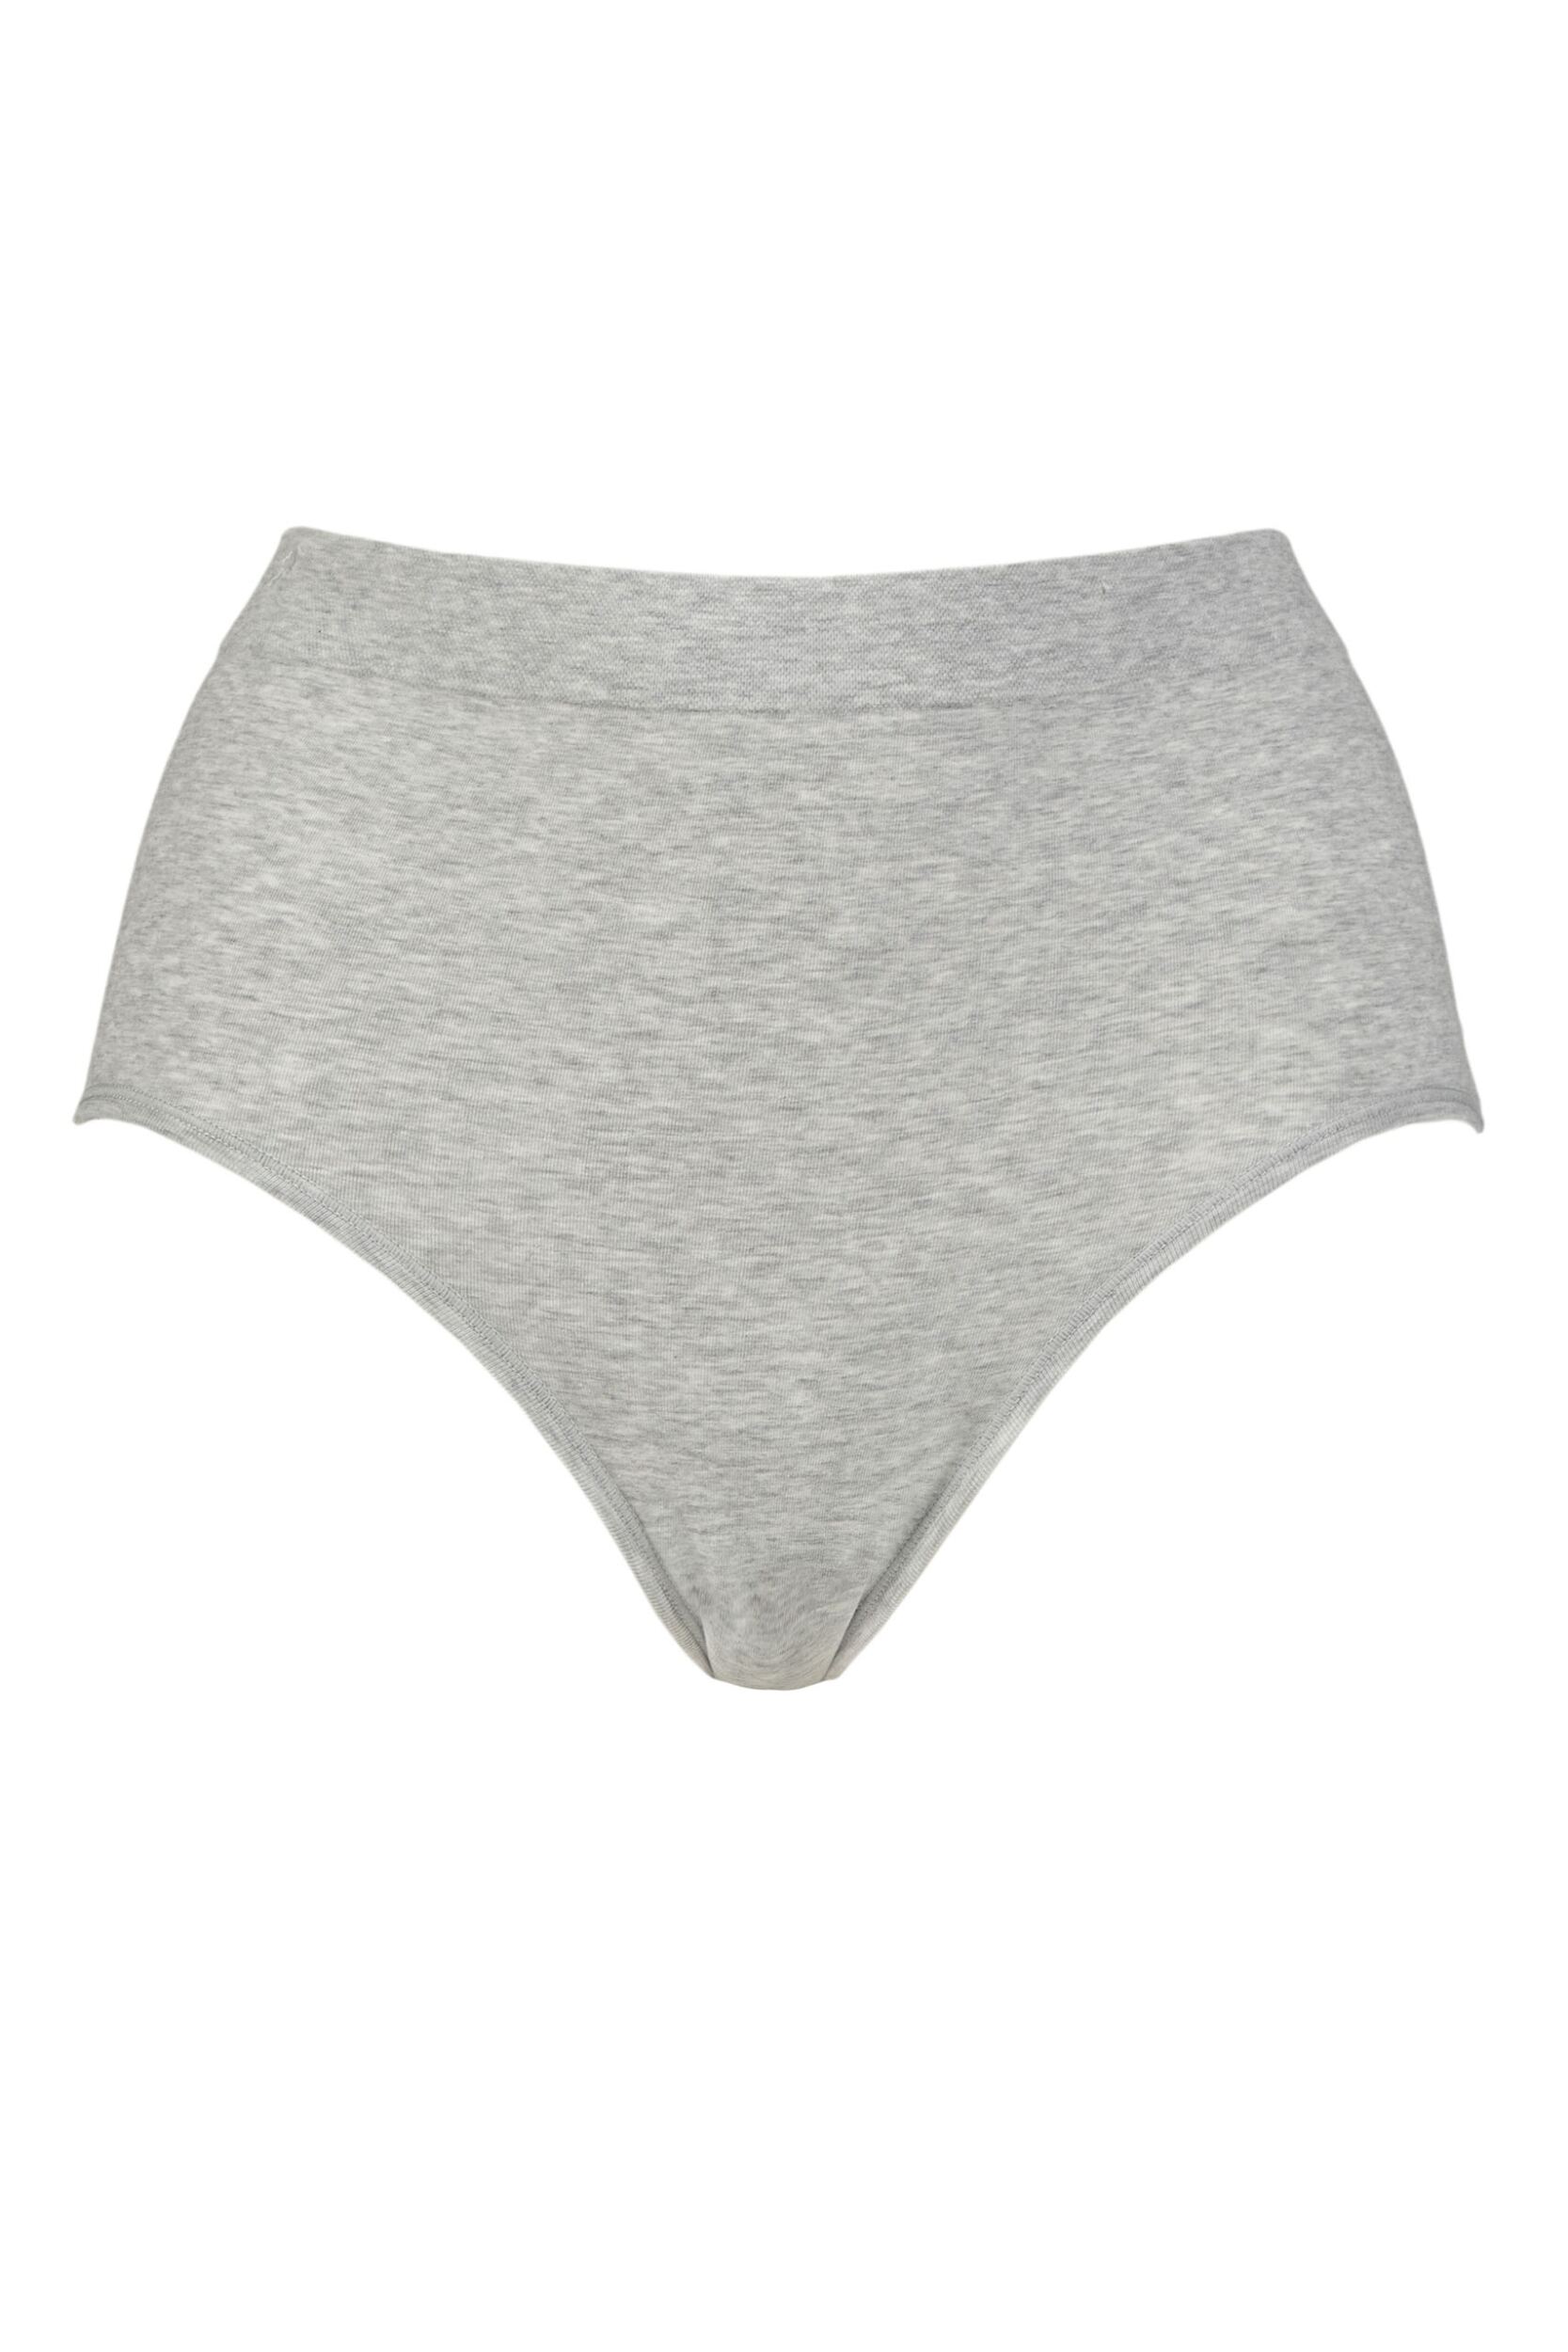 SockShop Ladies 1 Pack Ambra Organic Cotton Full Brief Underwear Mid Grey Marl UK 14-16  - Grey - Size: UK 14-16